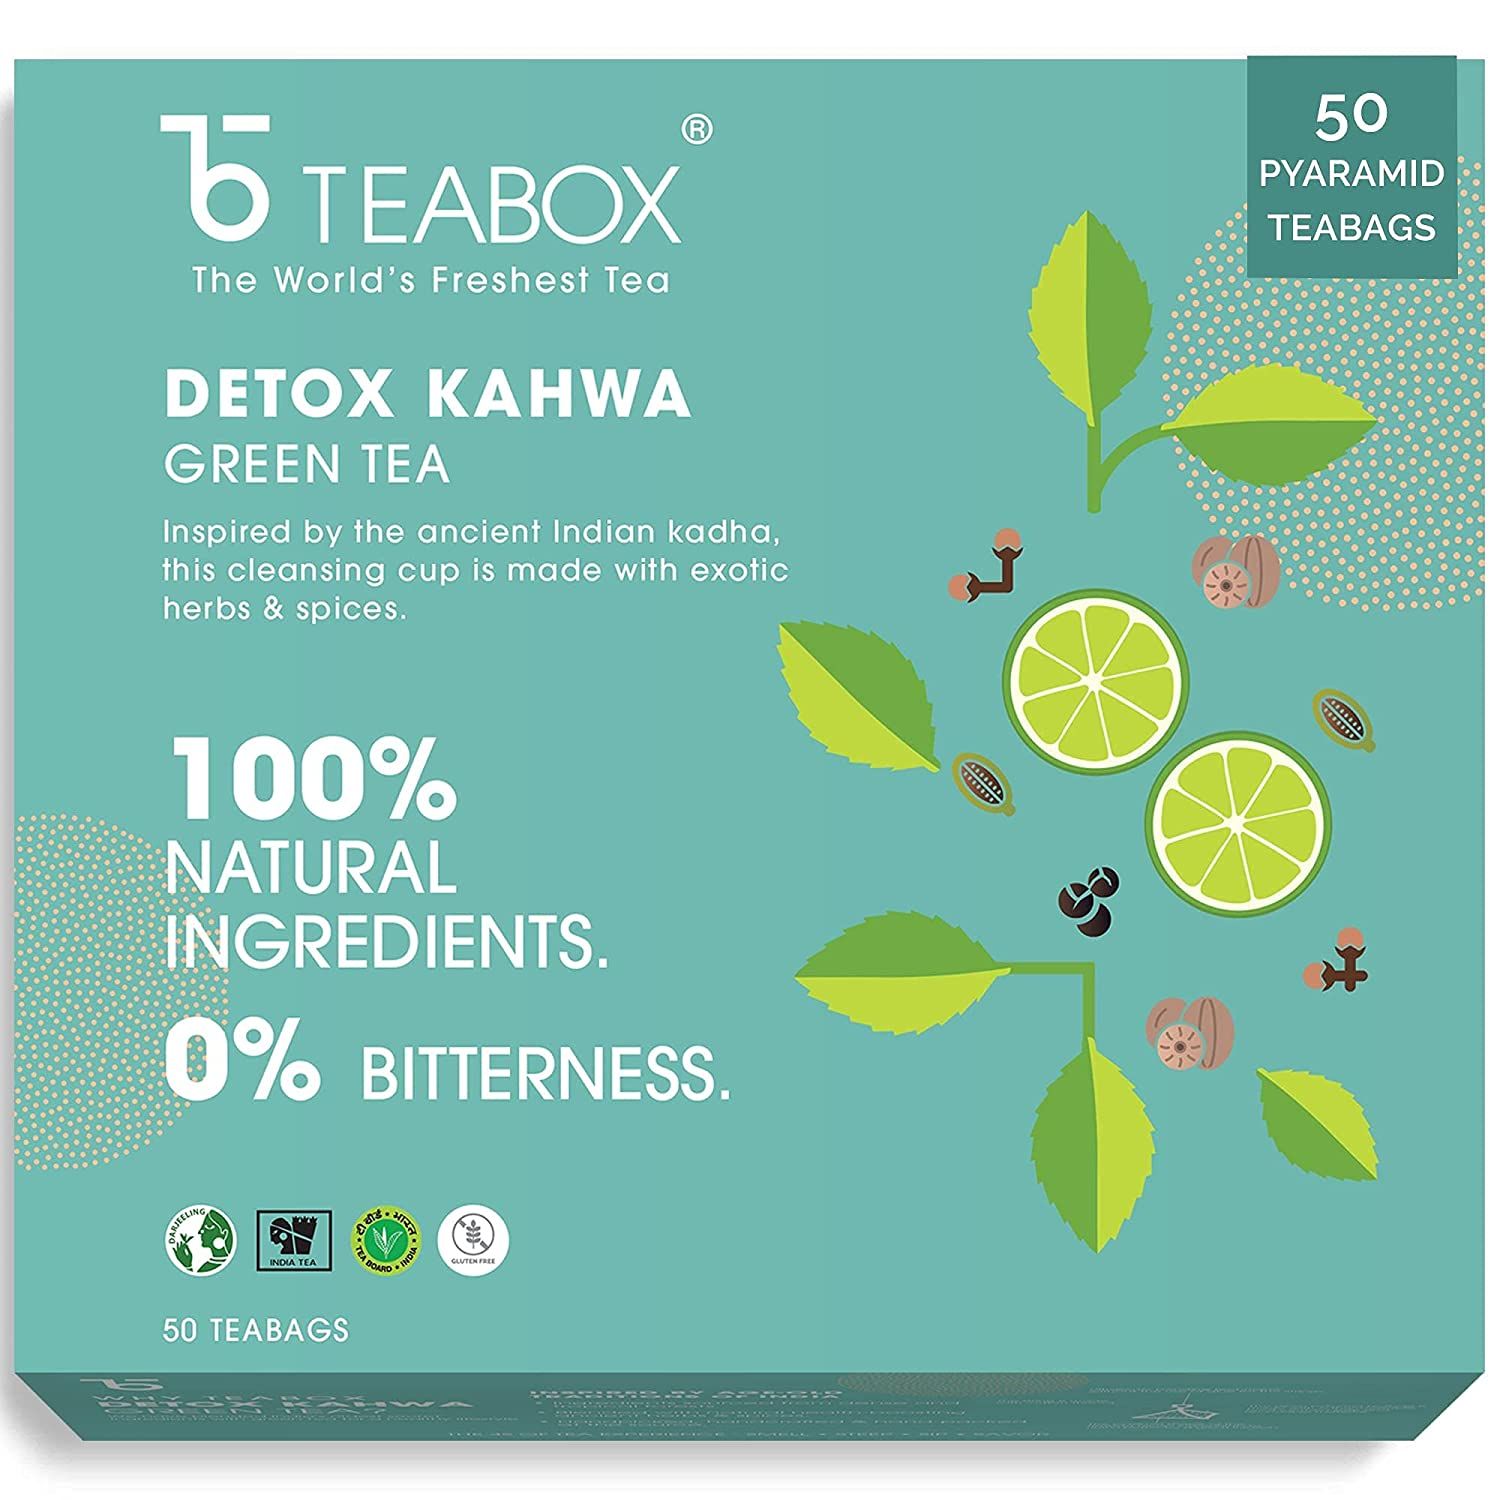 Teabox Detox Kahwa Green Tea Image